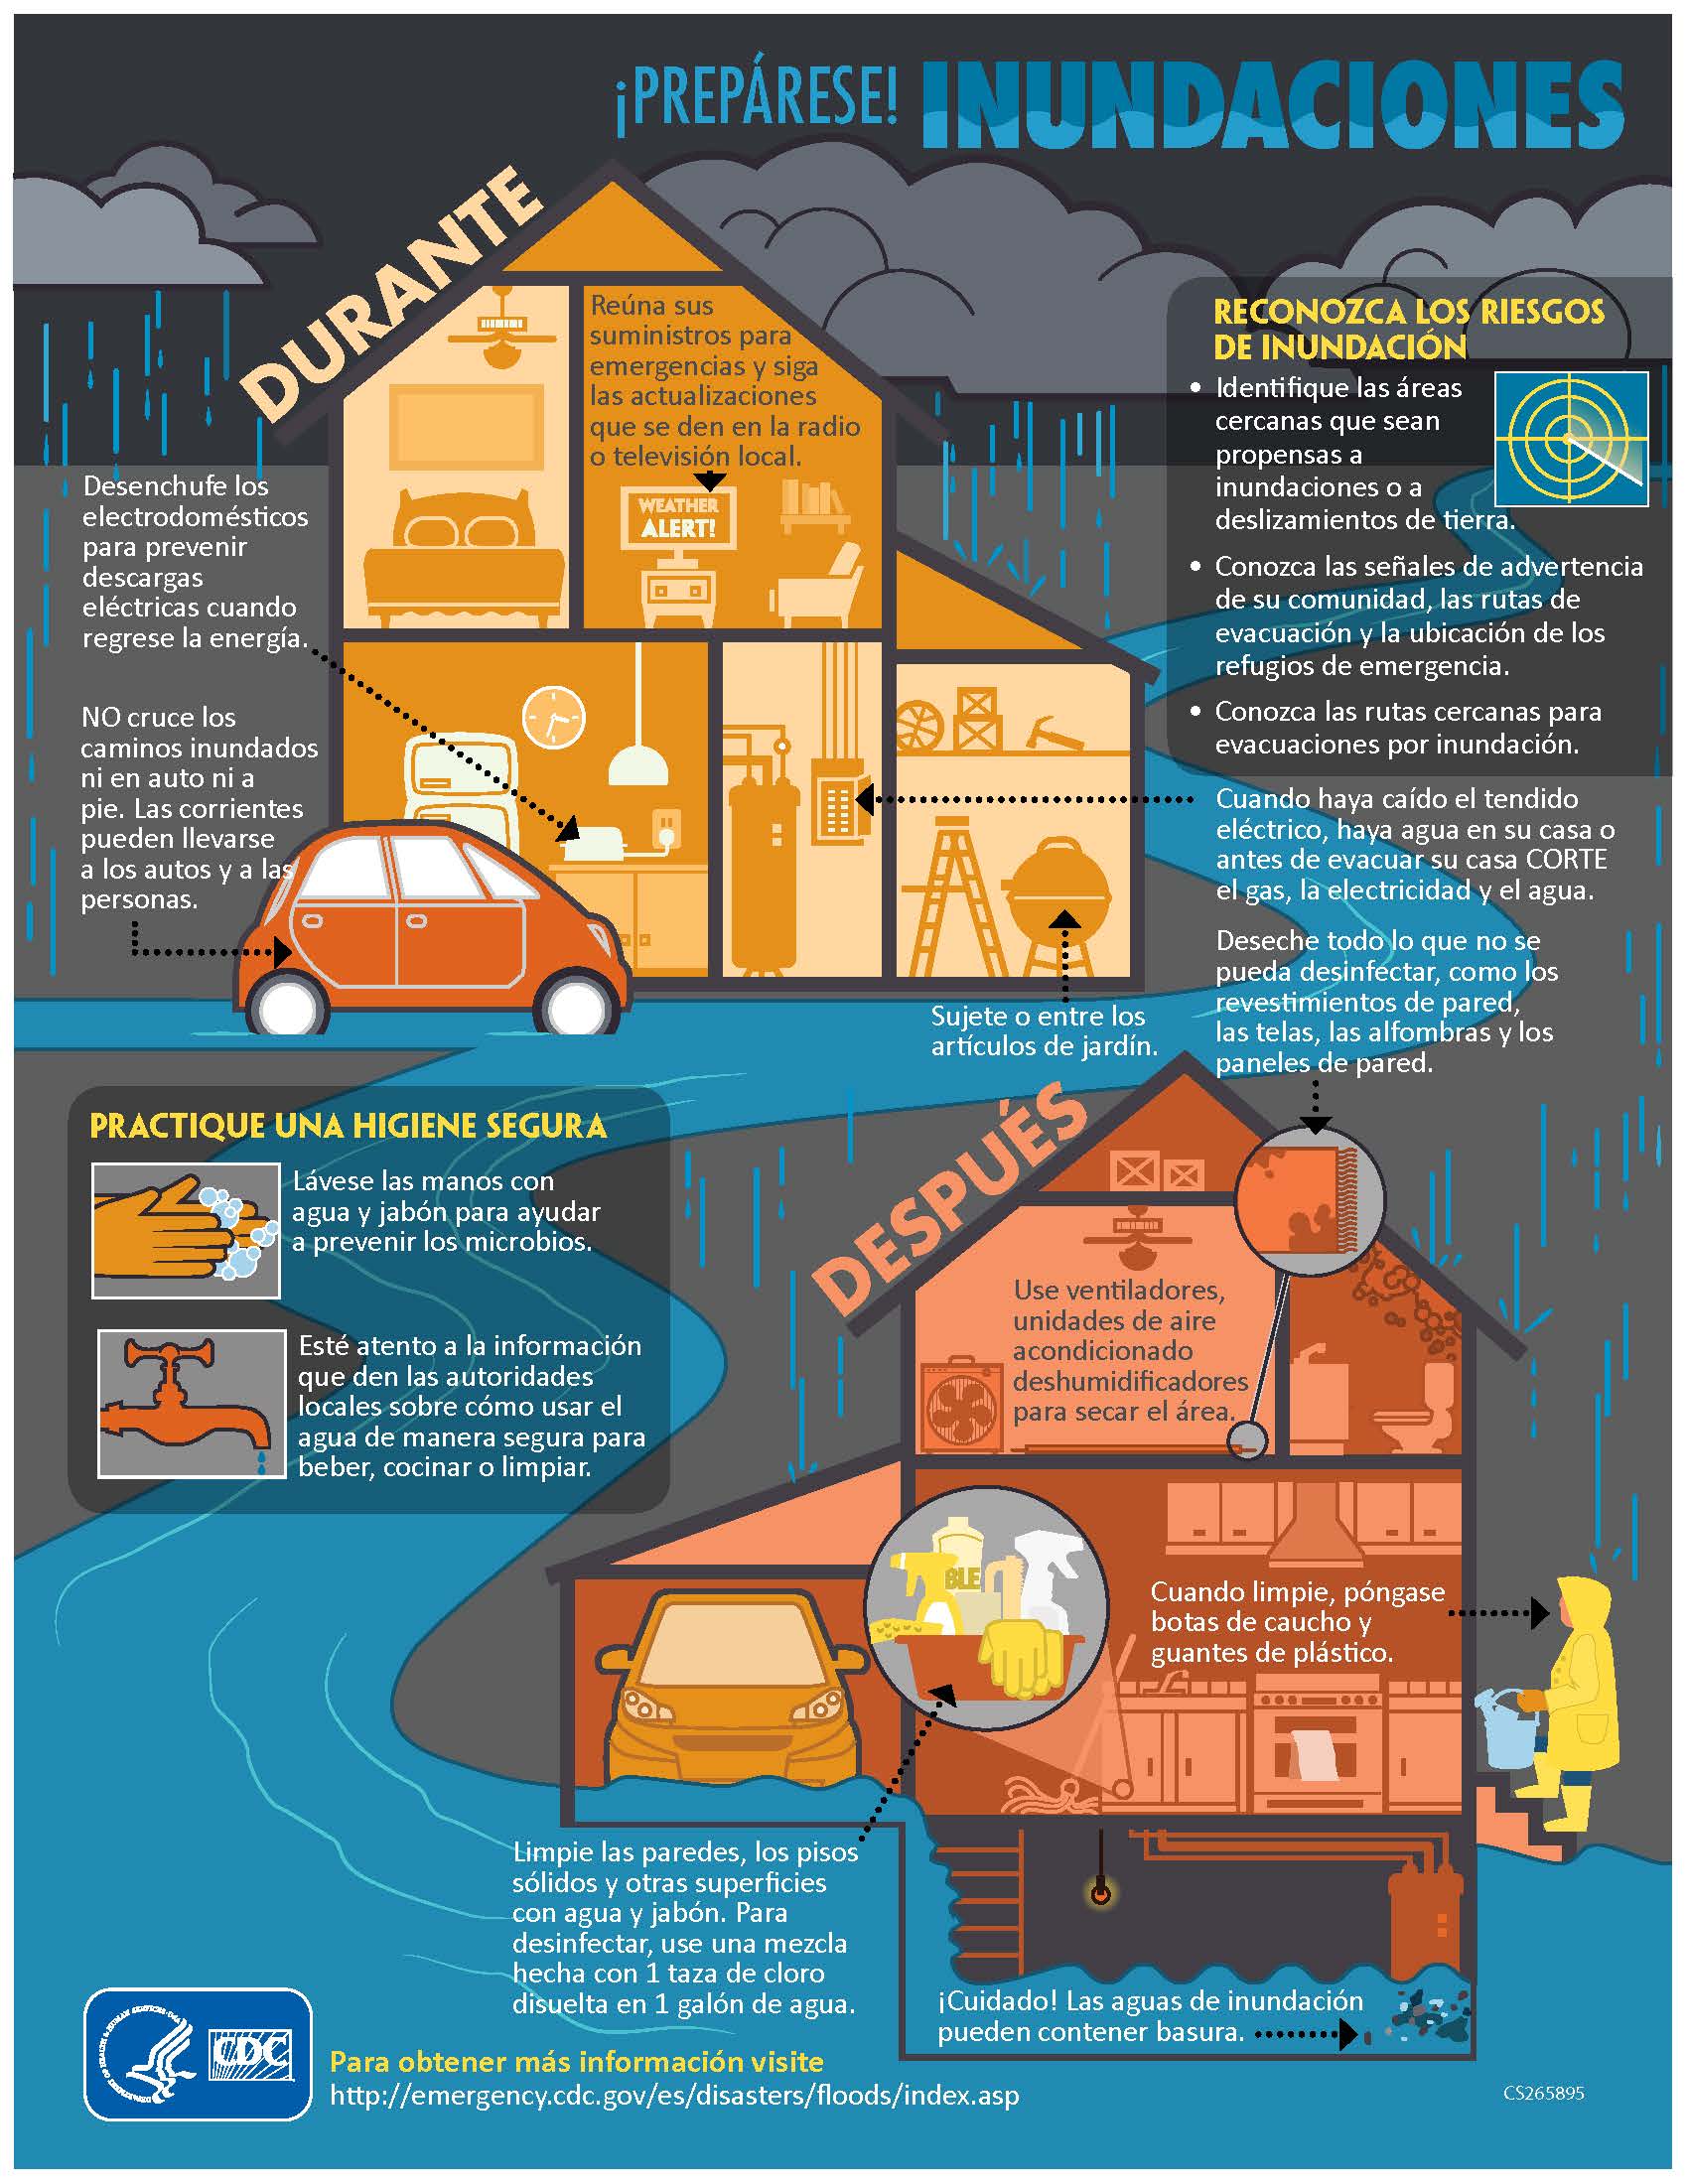 Flood preparation poster in Spanish